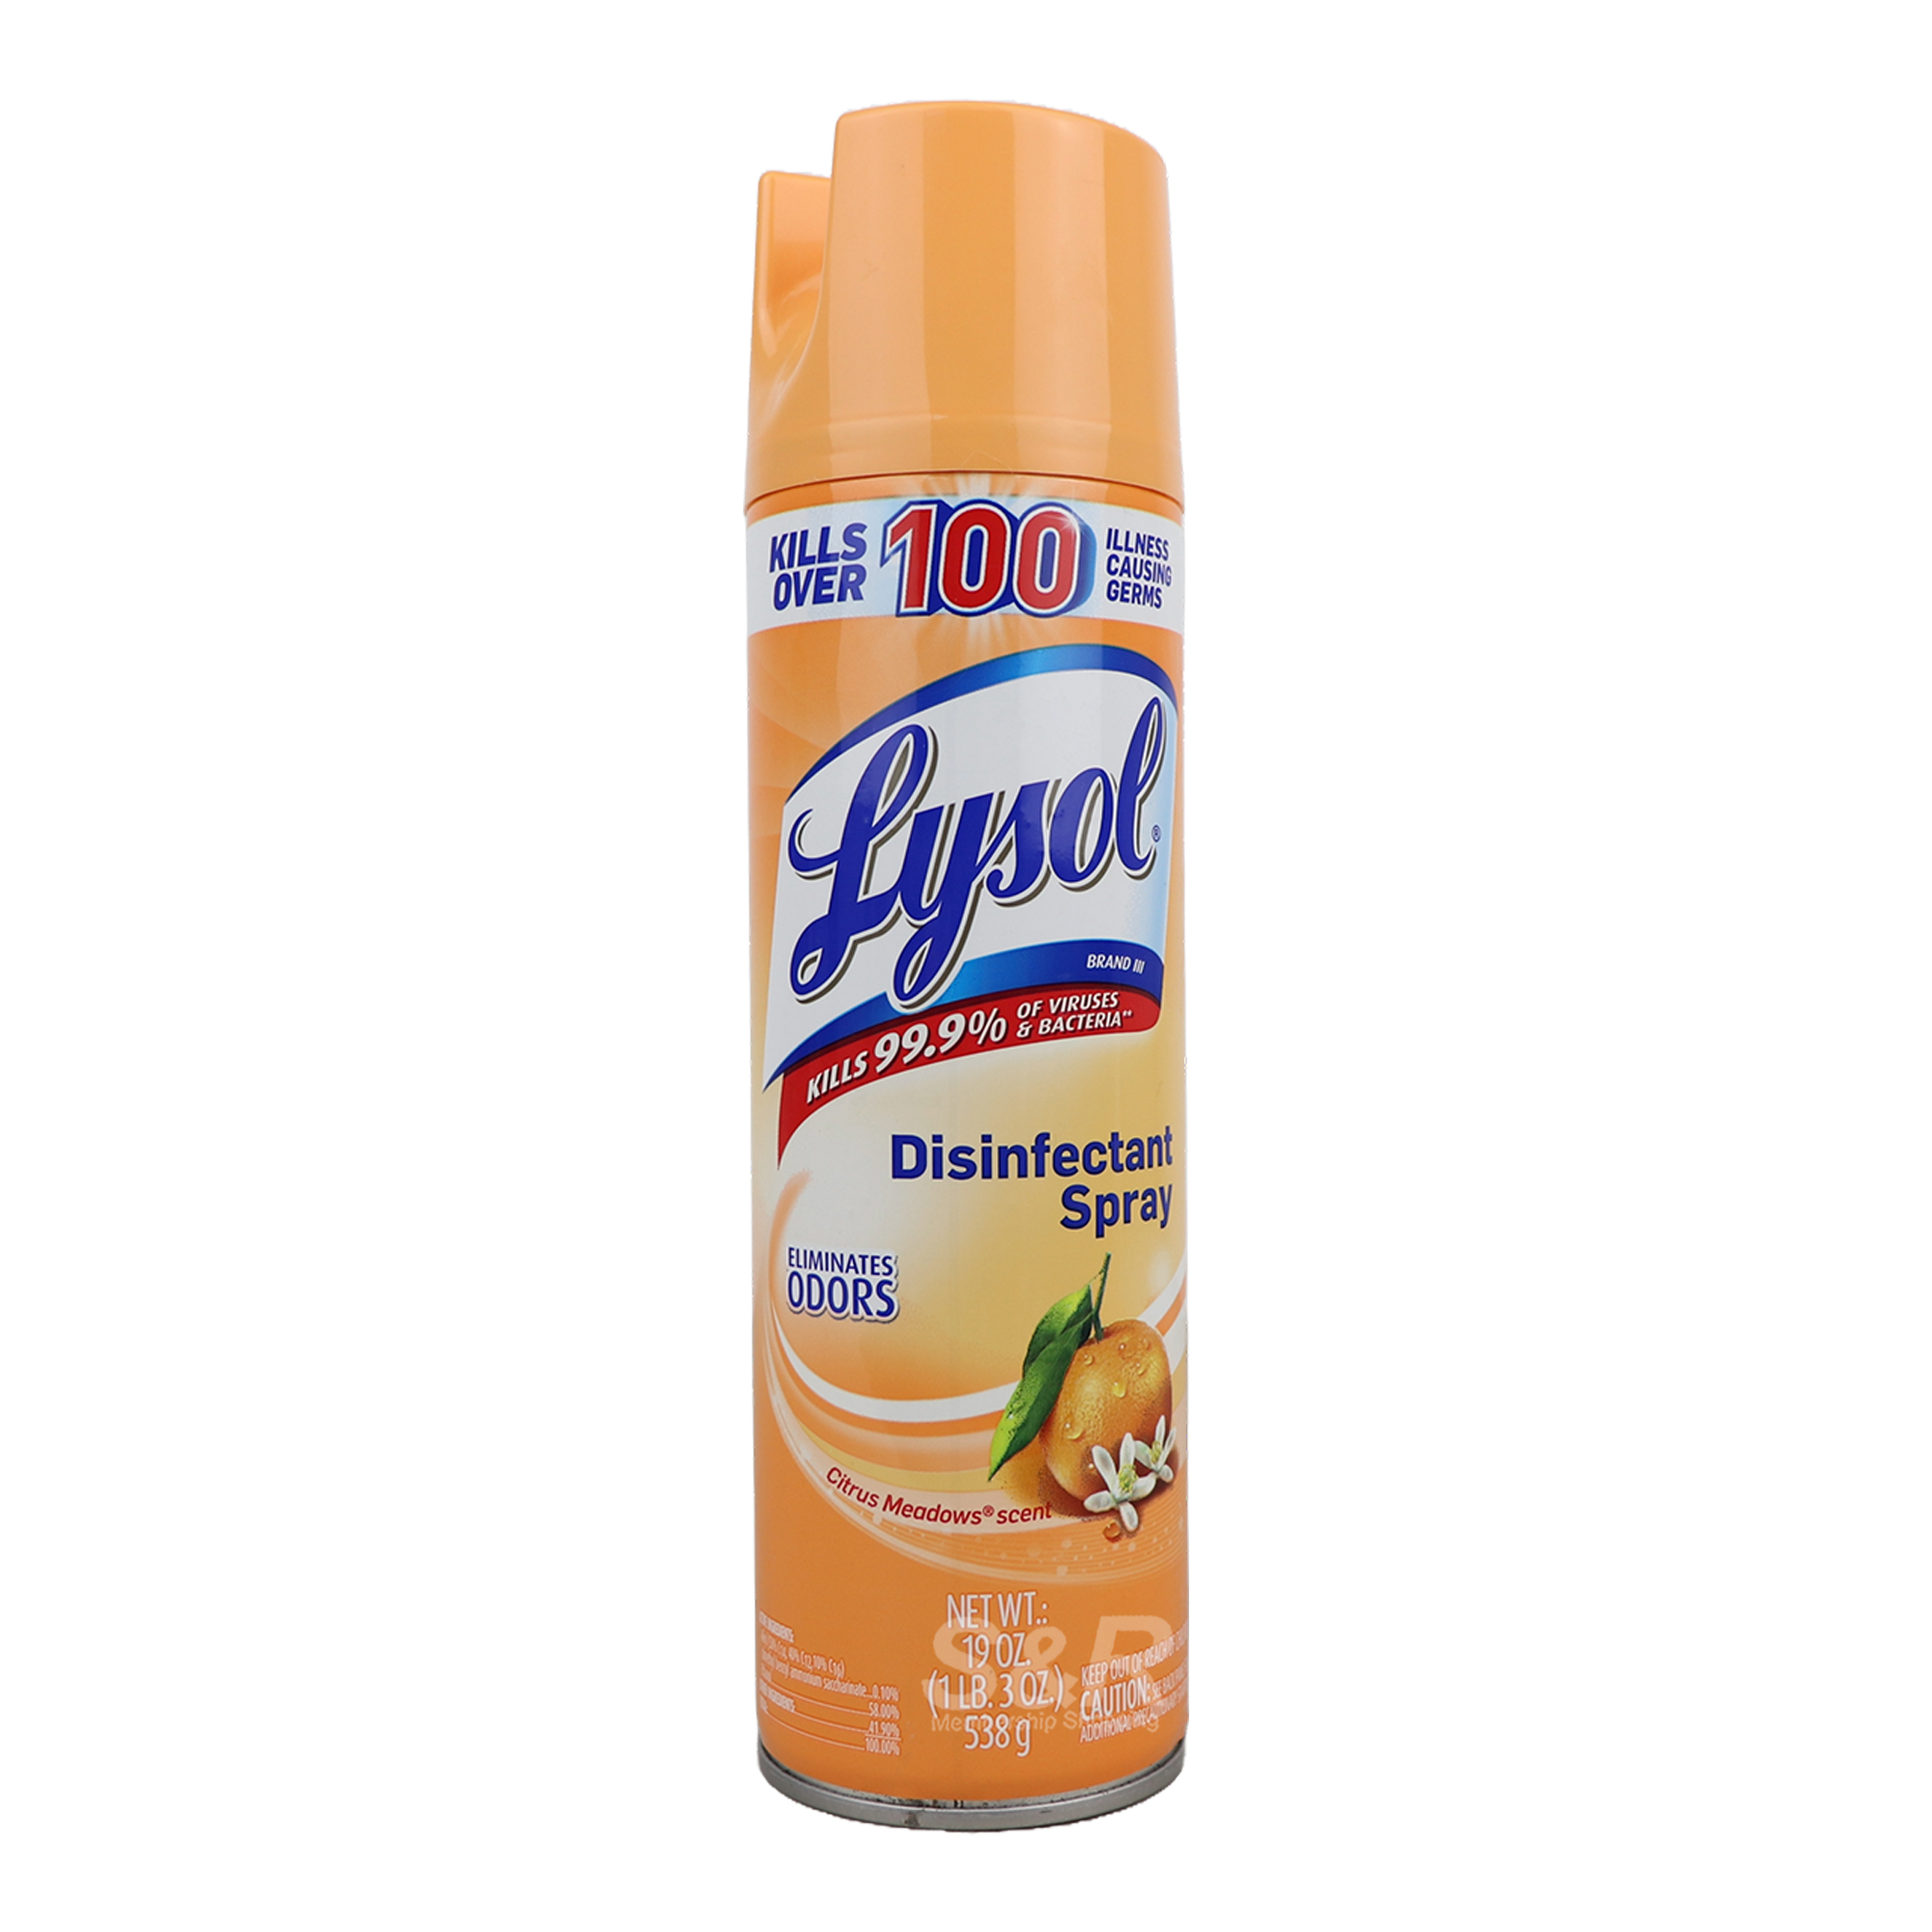 Lysol Disinfectant Spray Citrus Meadows Scent 538g